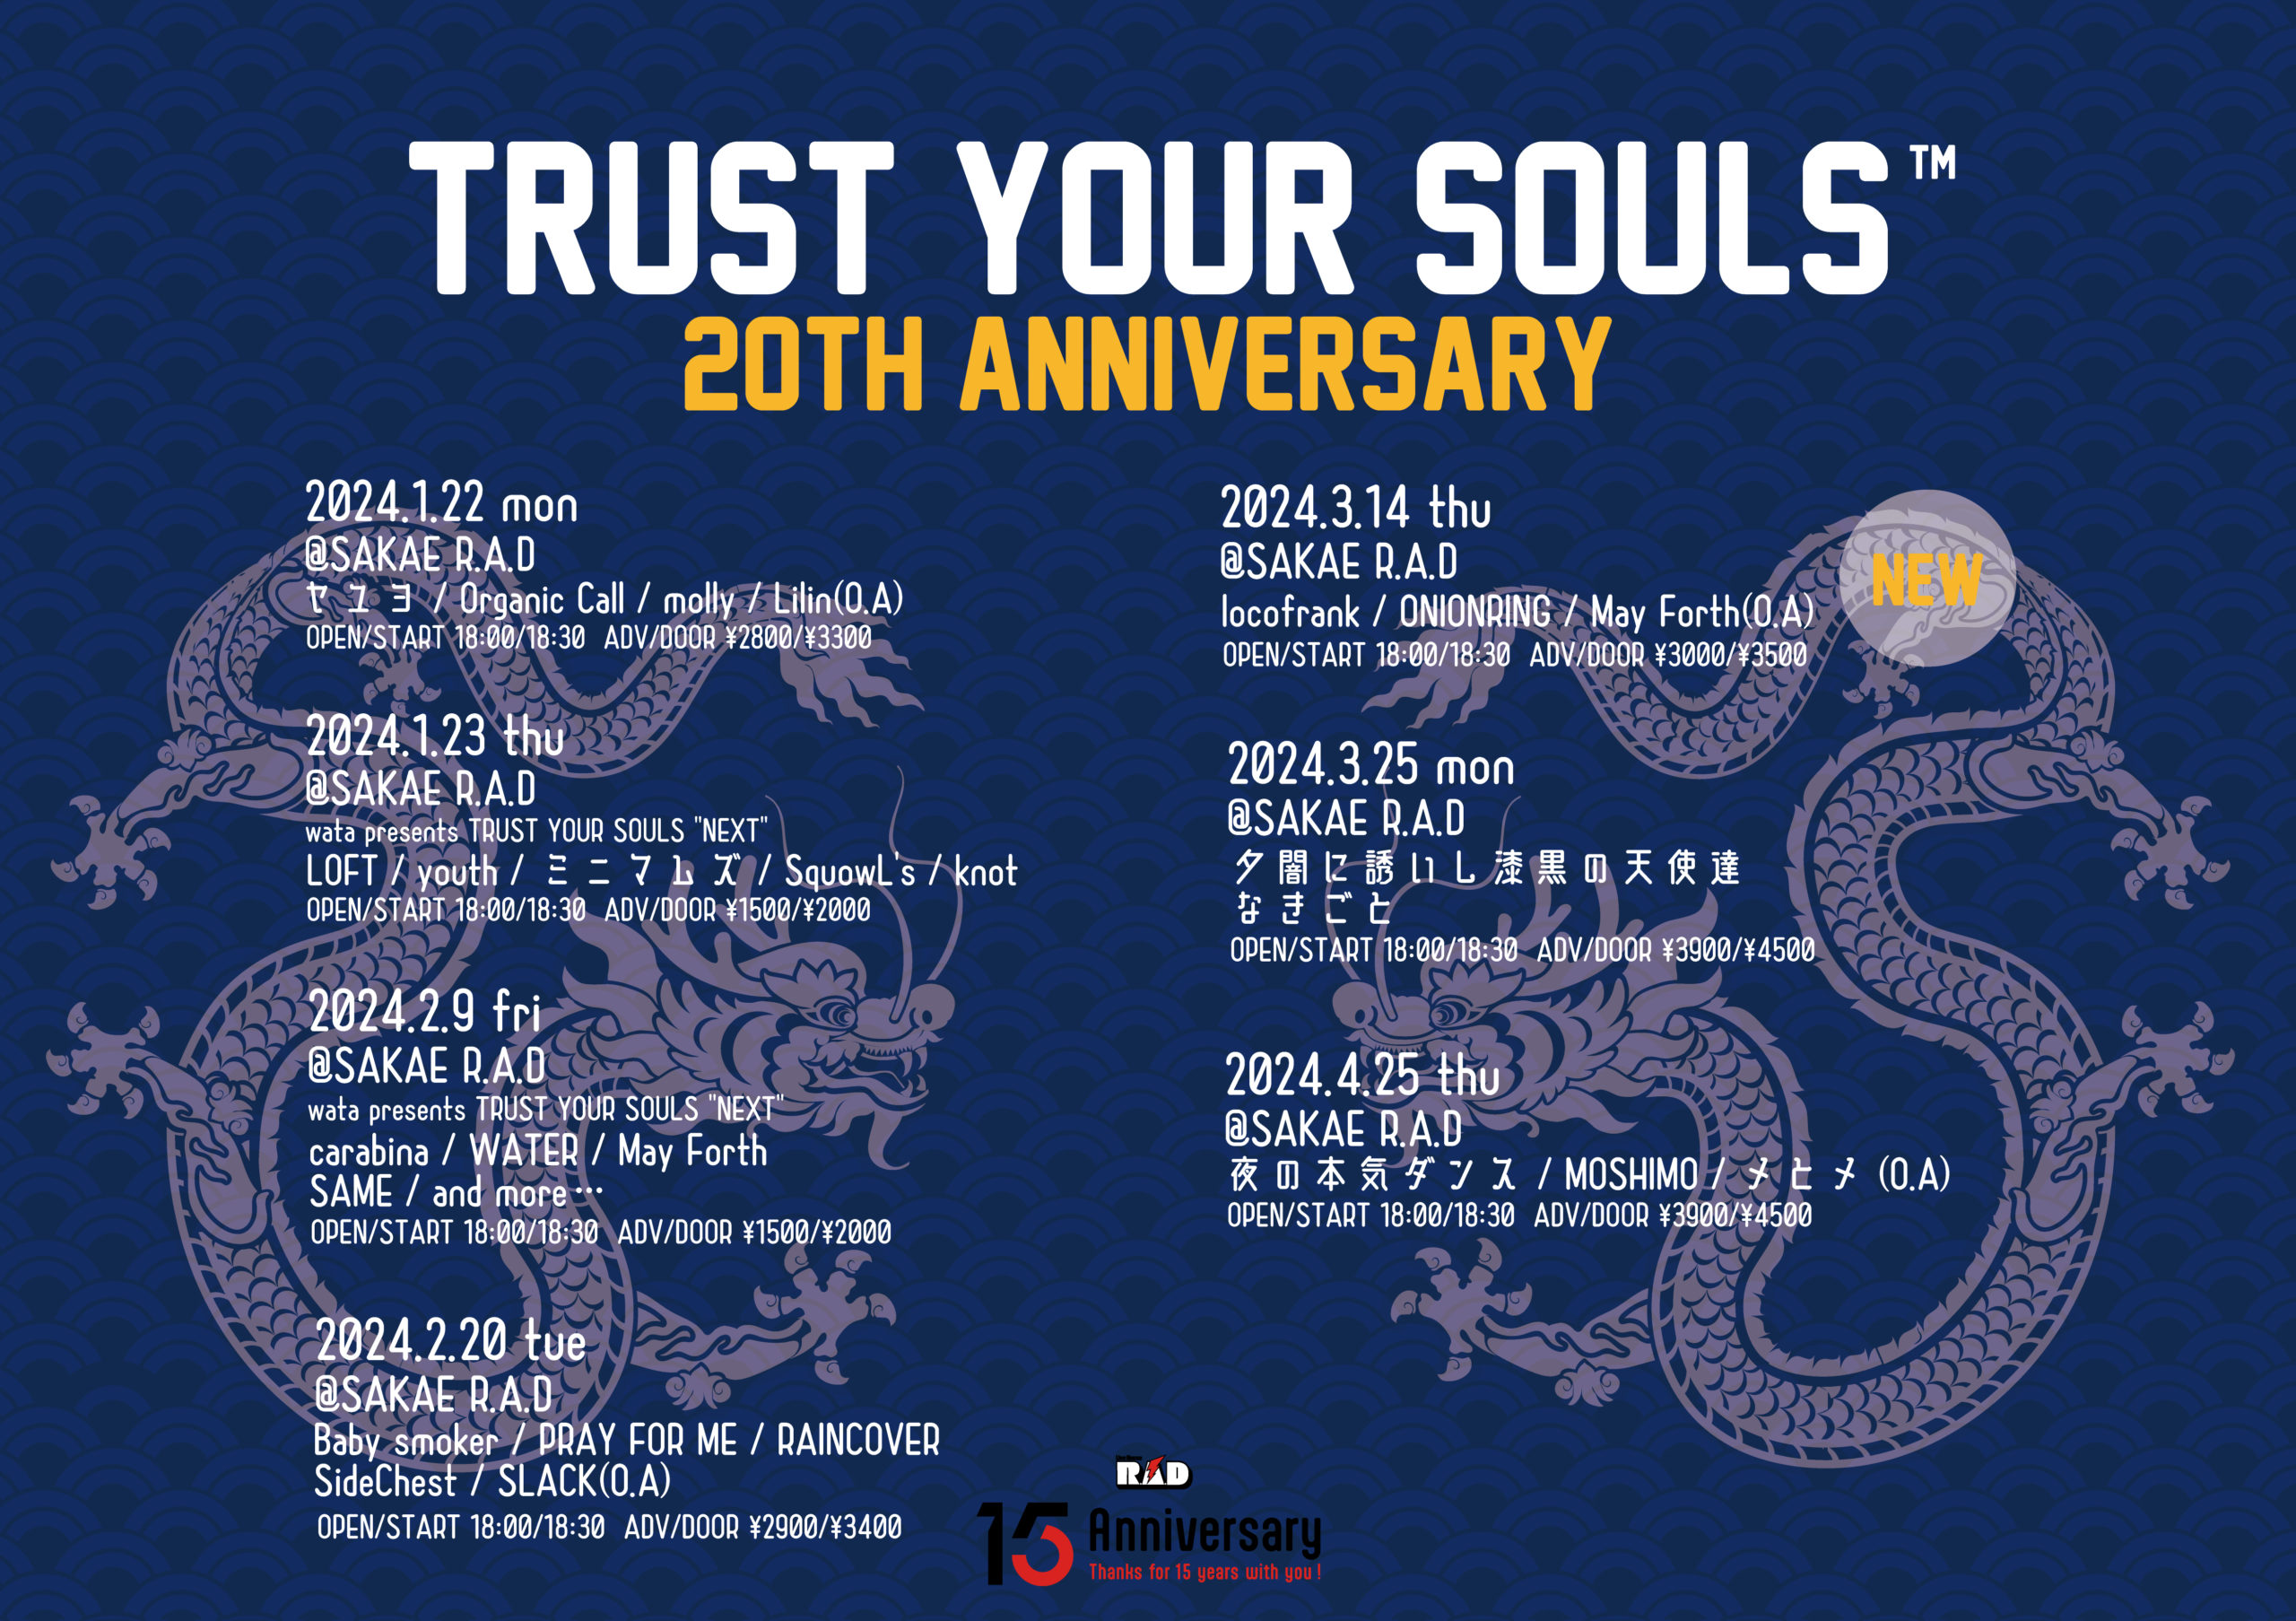 wata presents TRUST YOUR SOULS 20th Anniversary -R.A.D 15th Anniversary-